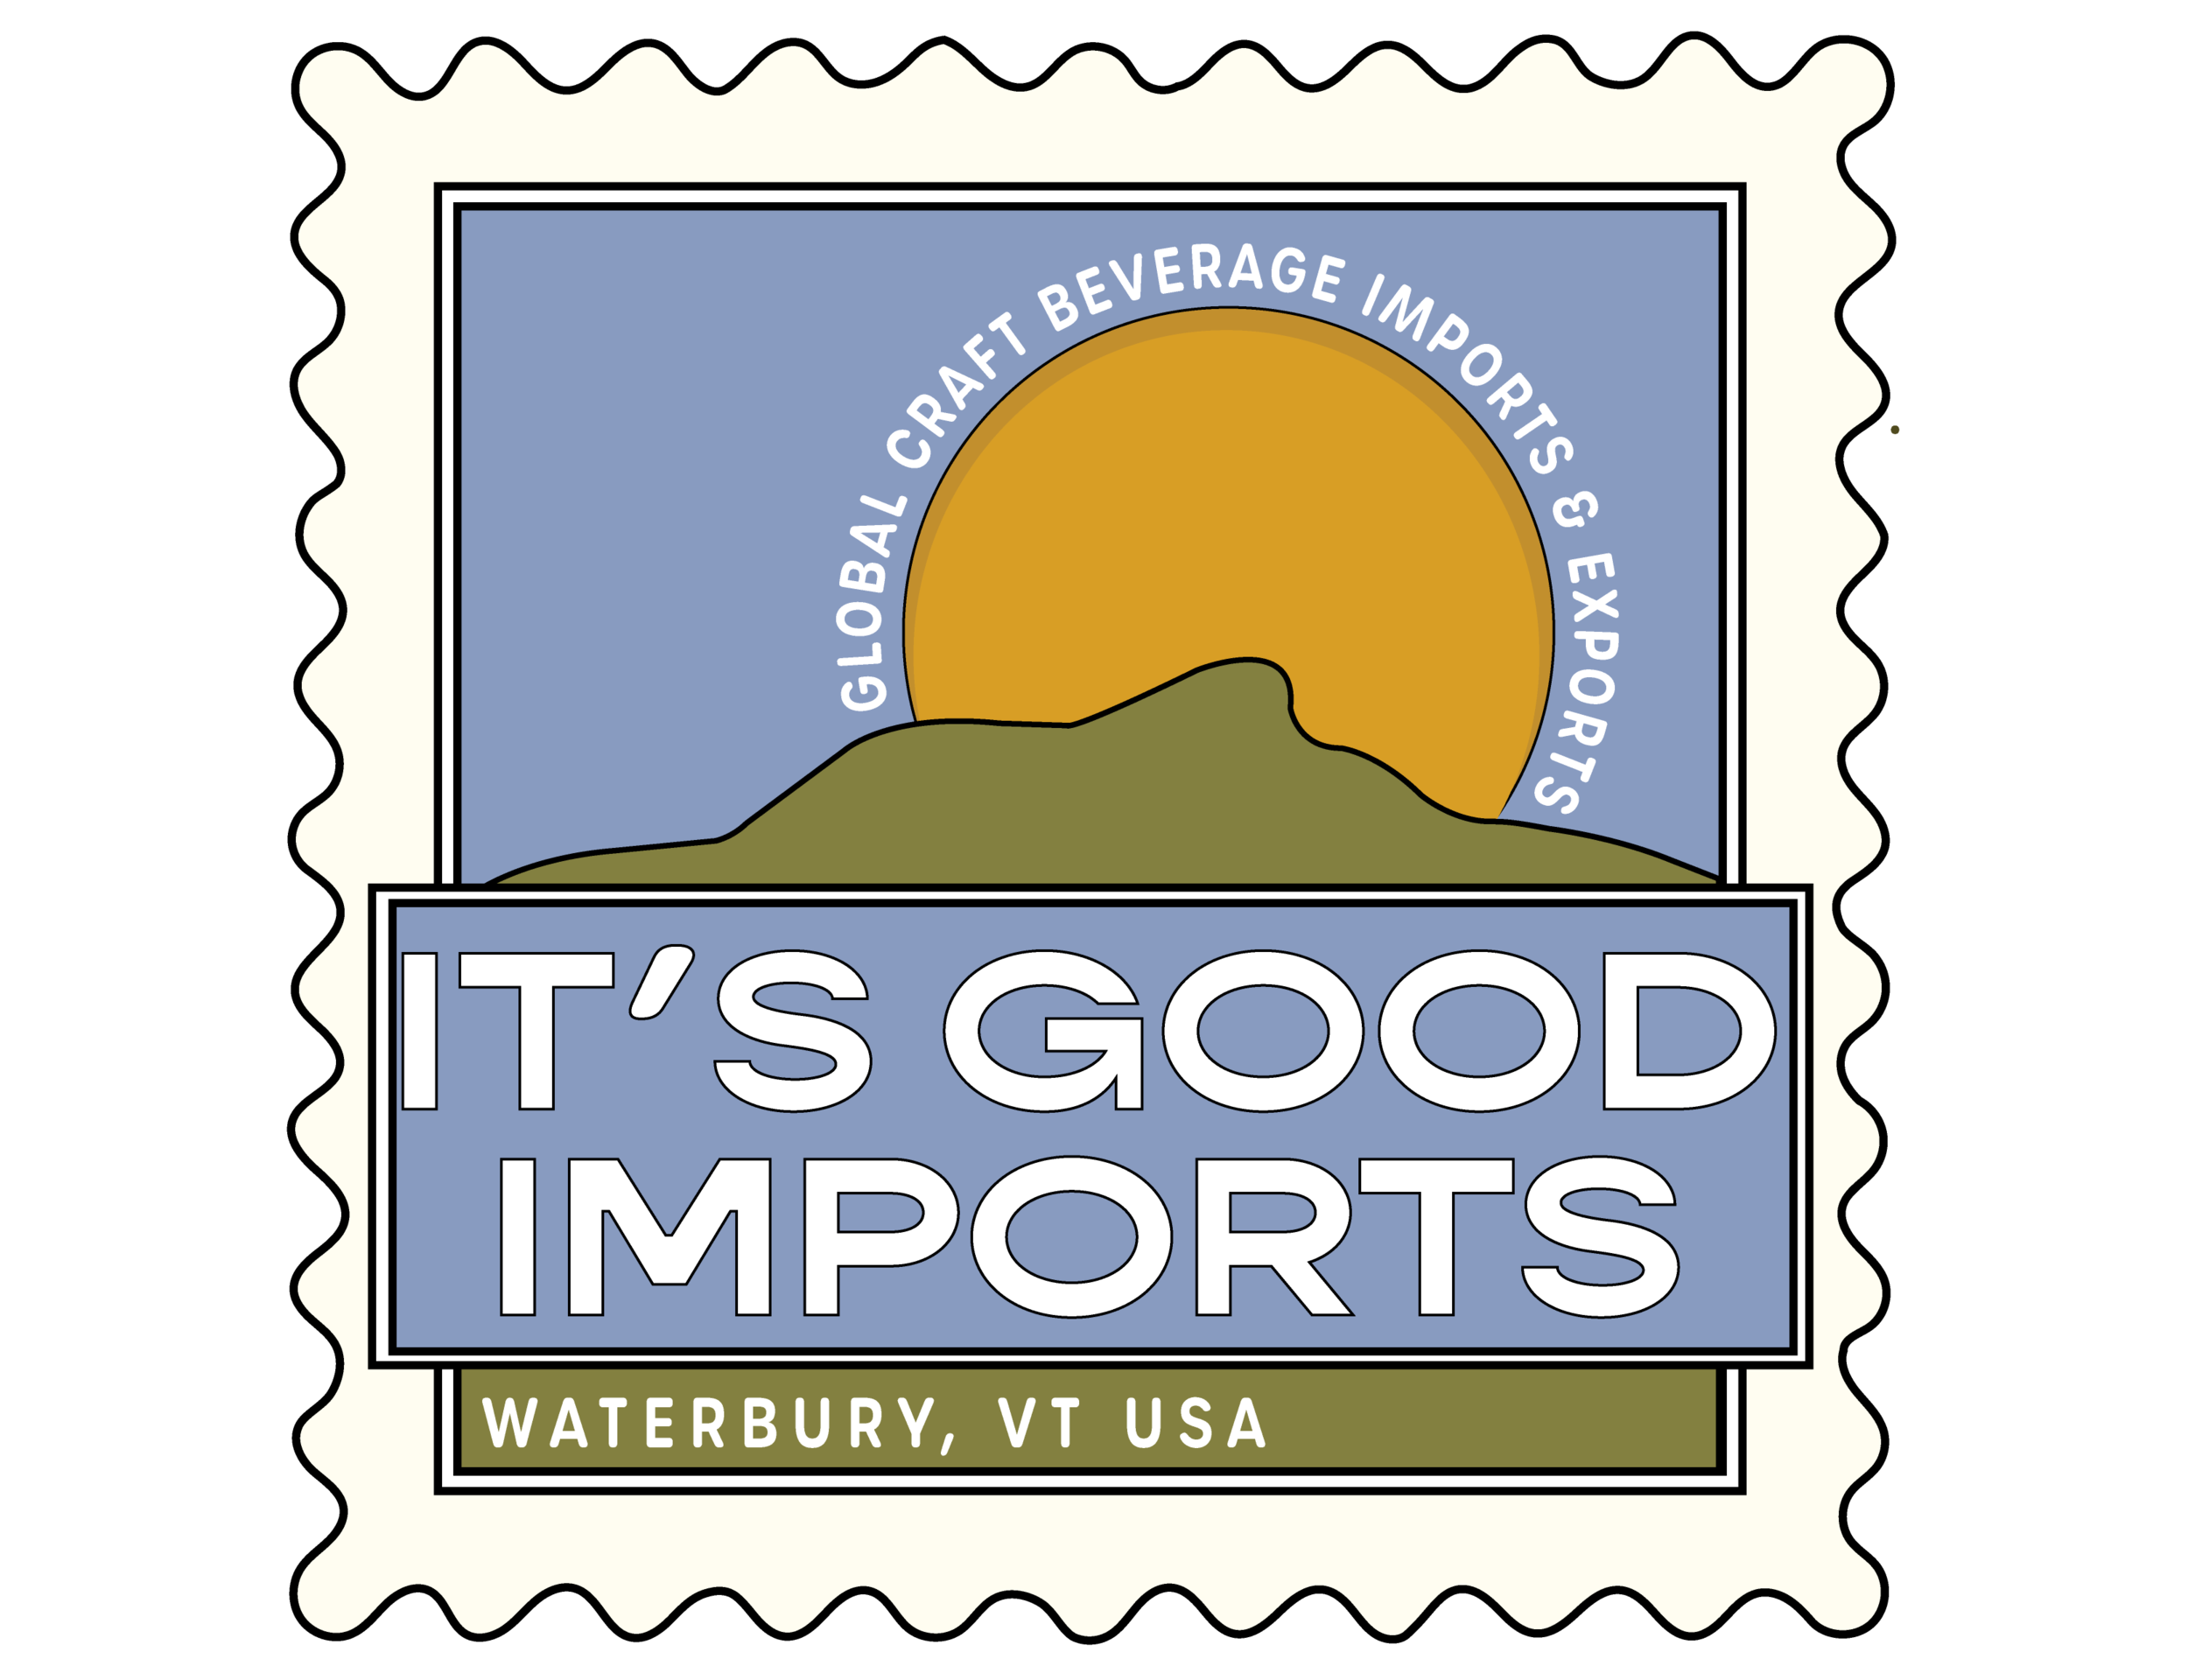 Good import